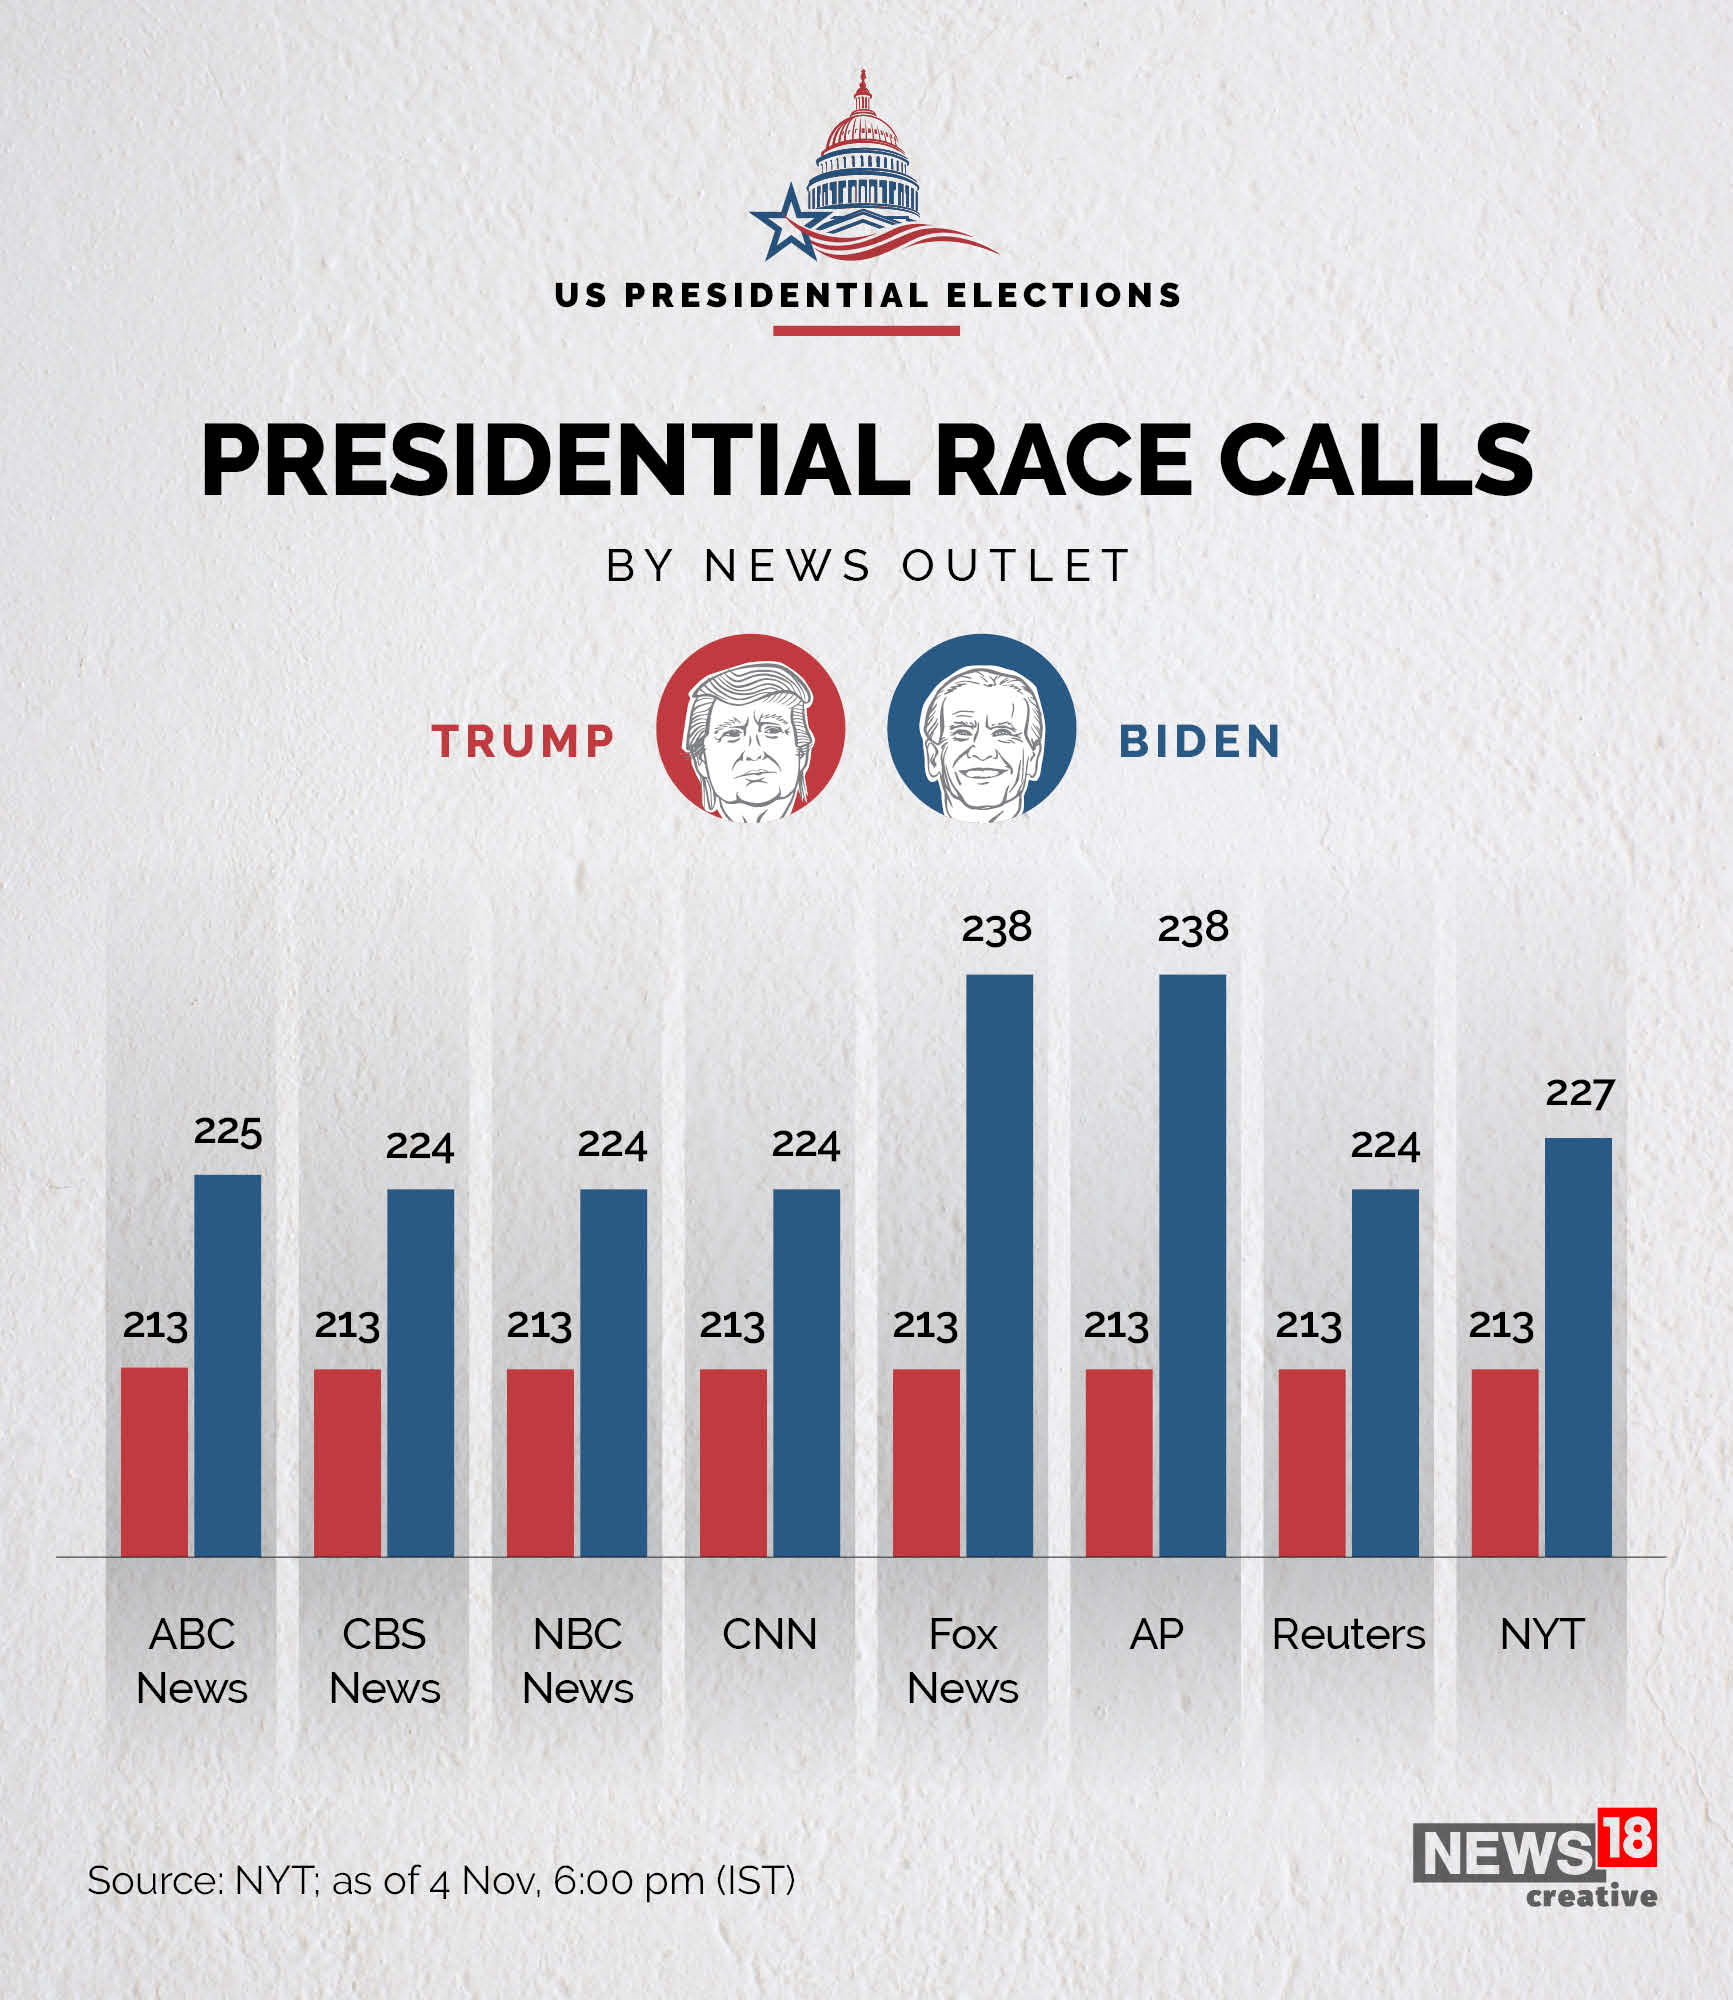 Trump vs Biden: Who is projected to win?